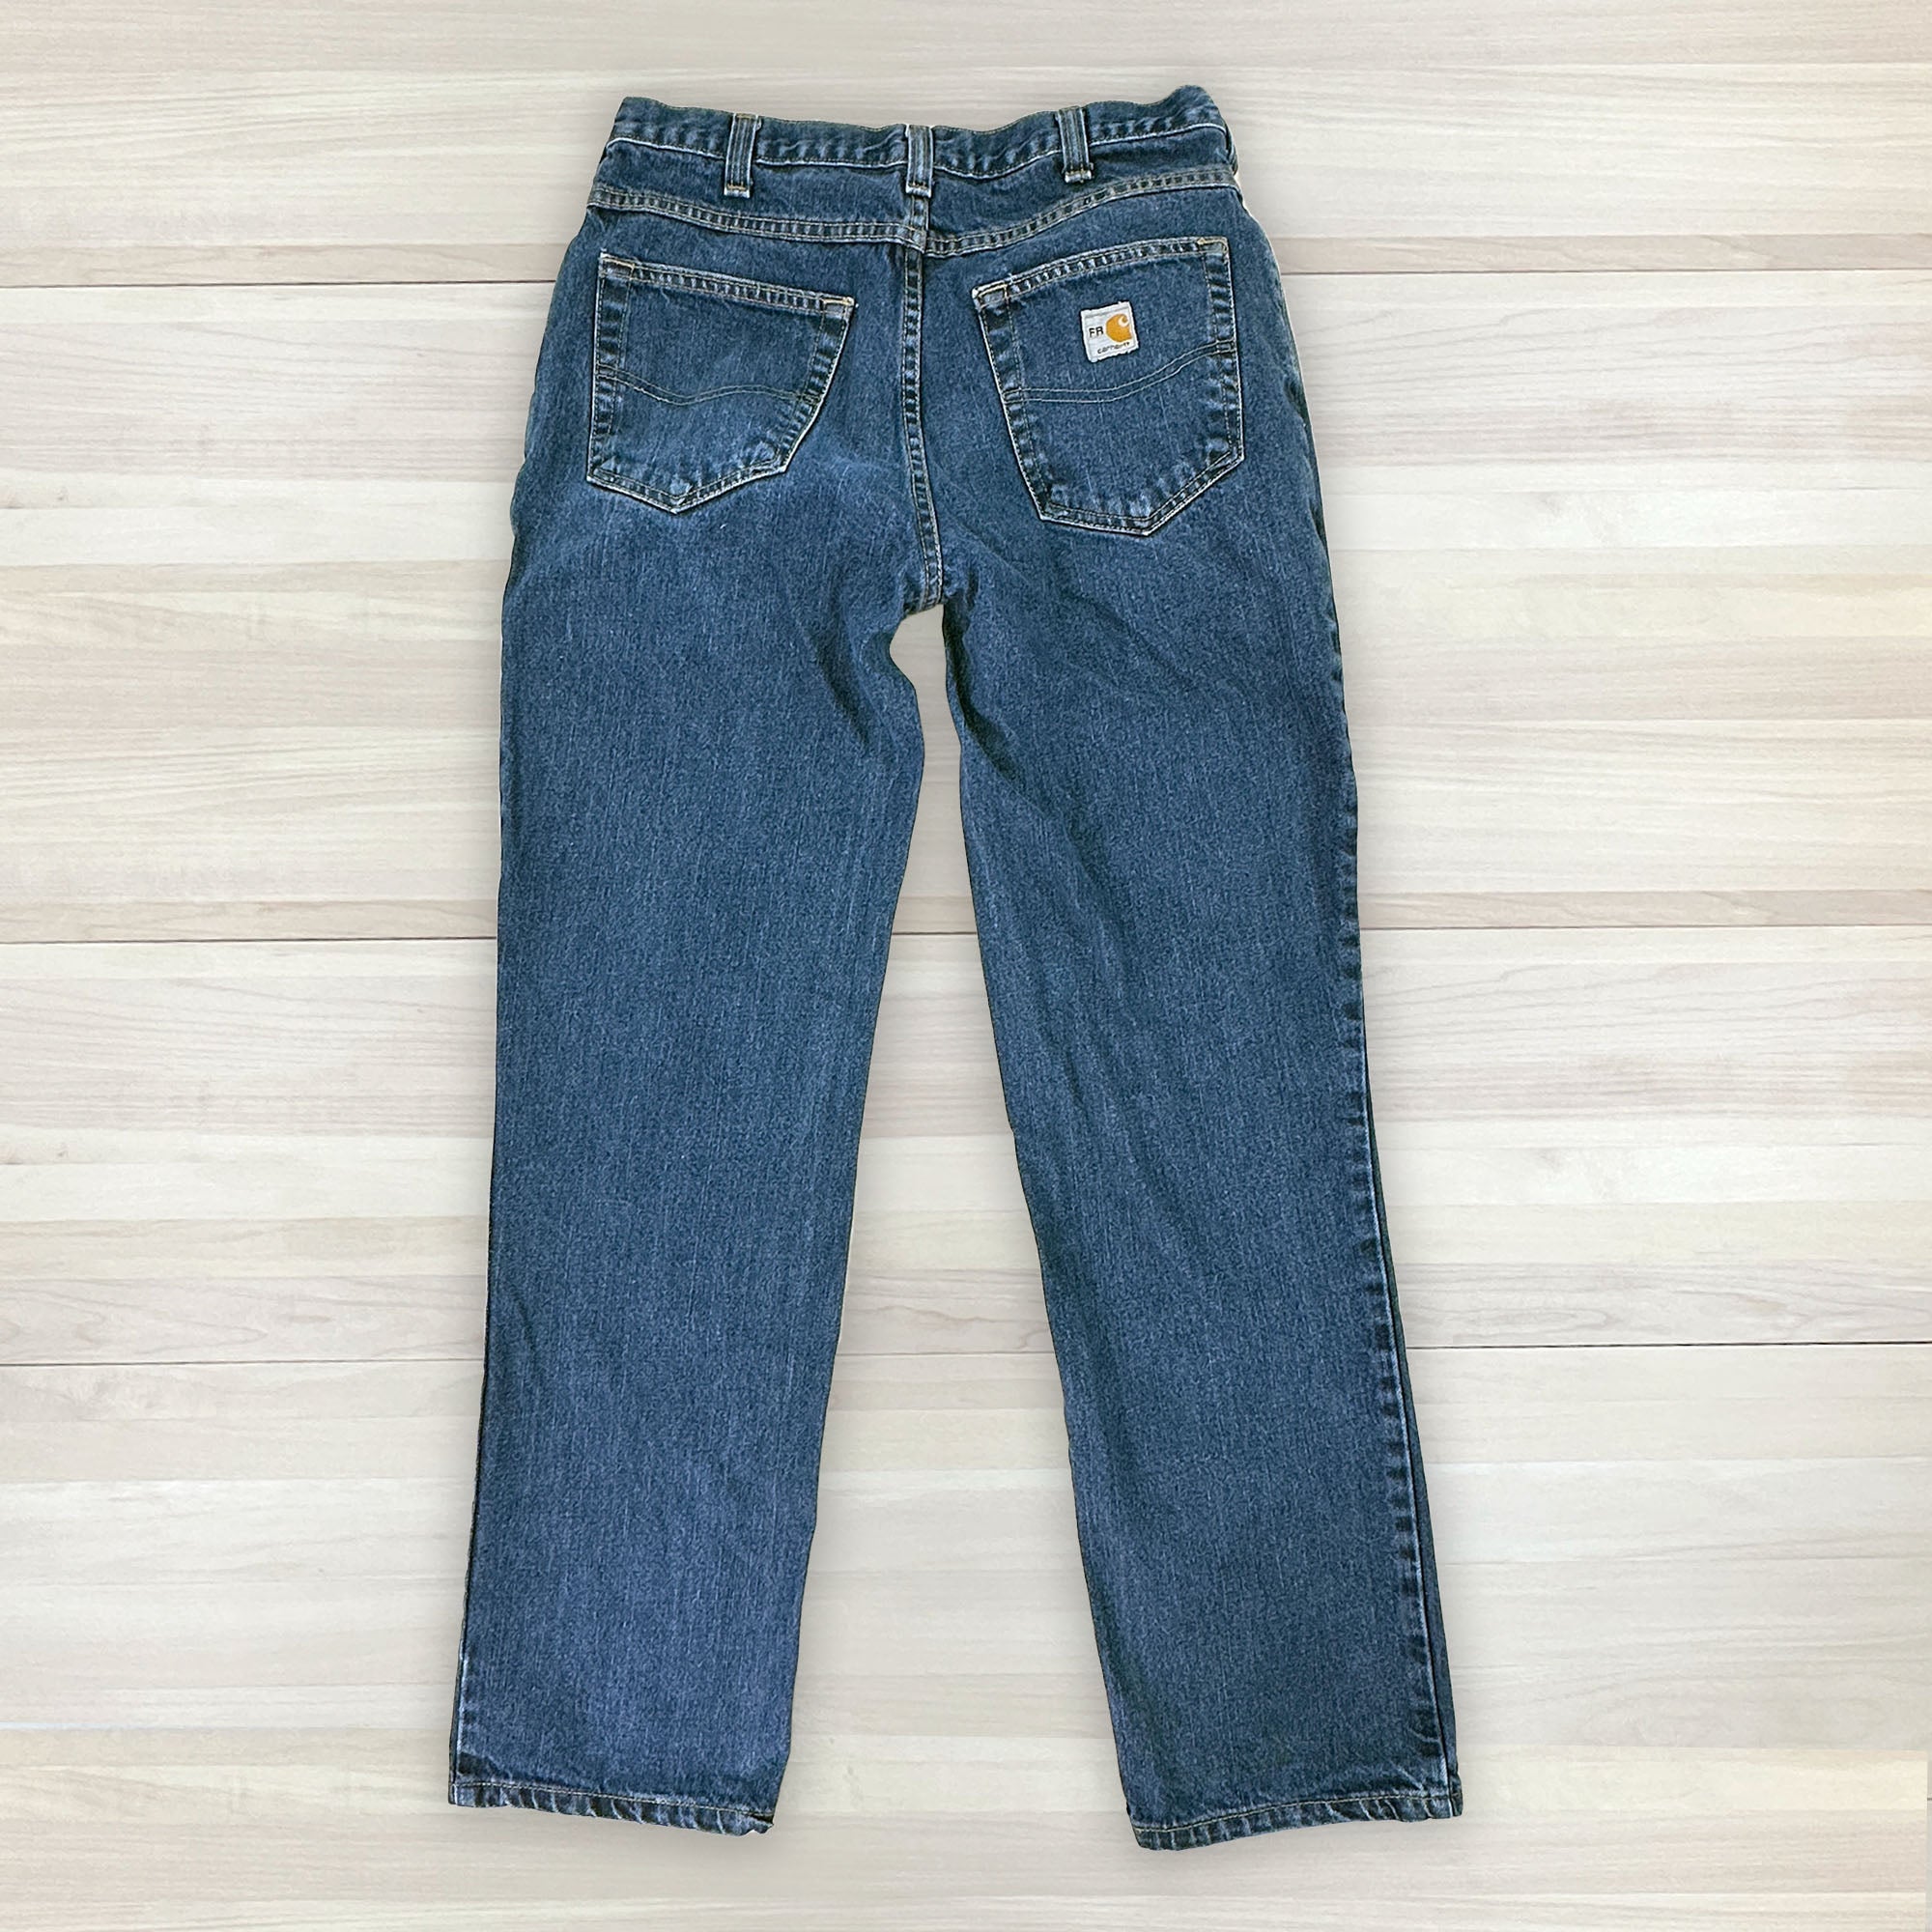 Men's Carhartt FR Flame Resistant Jeans - 32x33 - 0